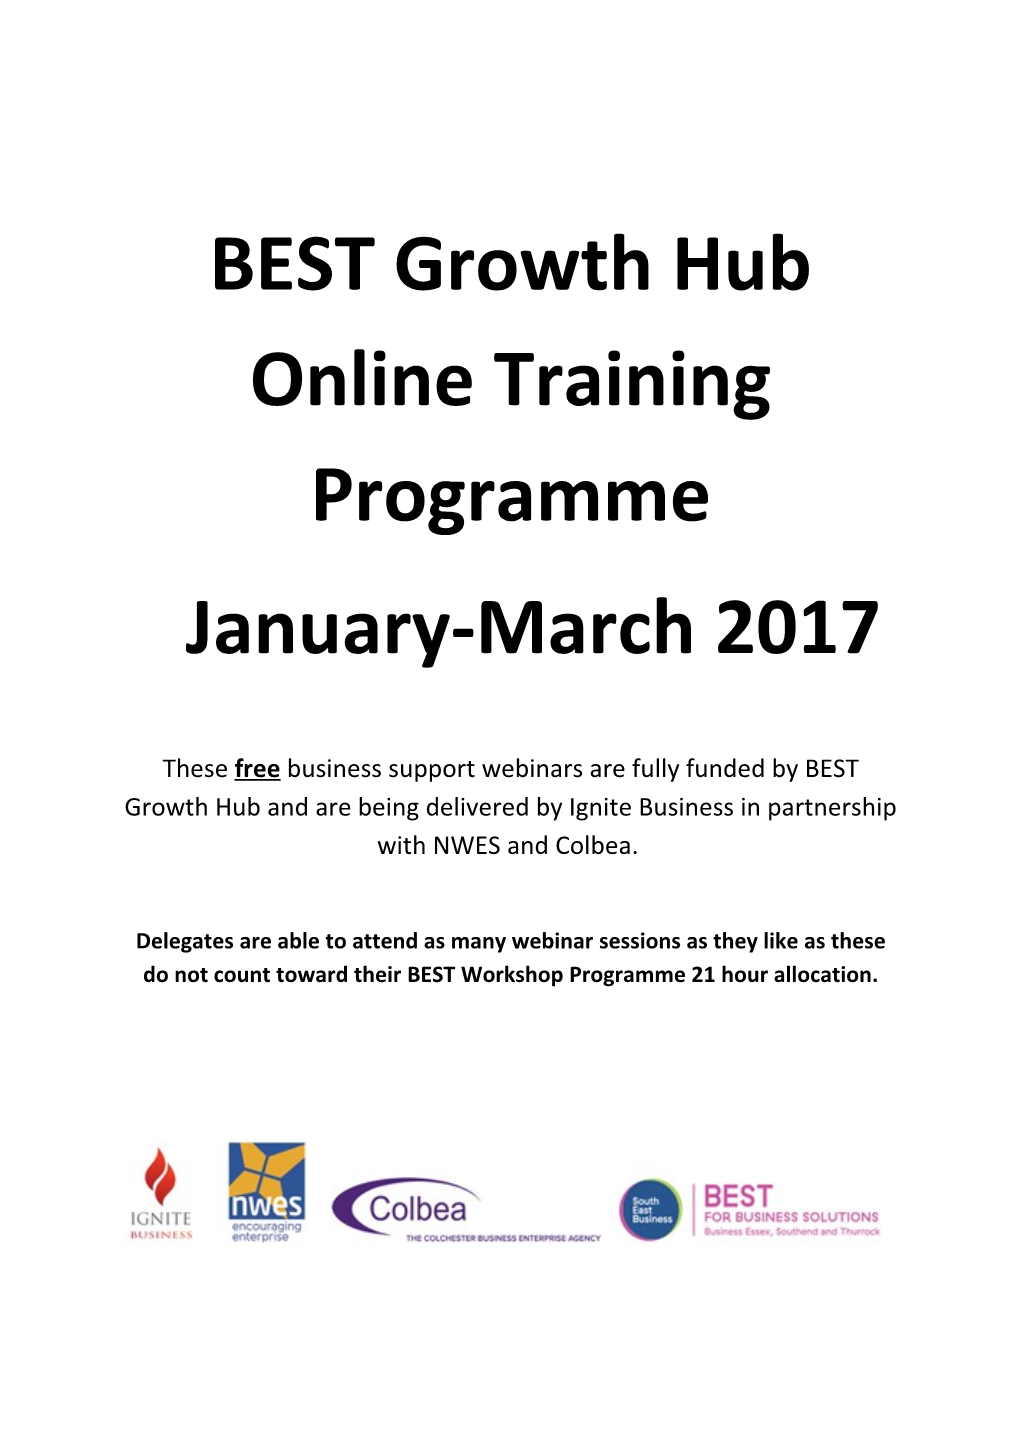 BEST Growth Hub Online Training Programme